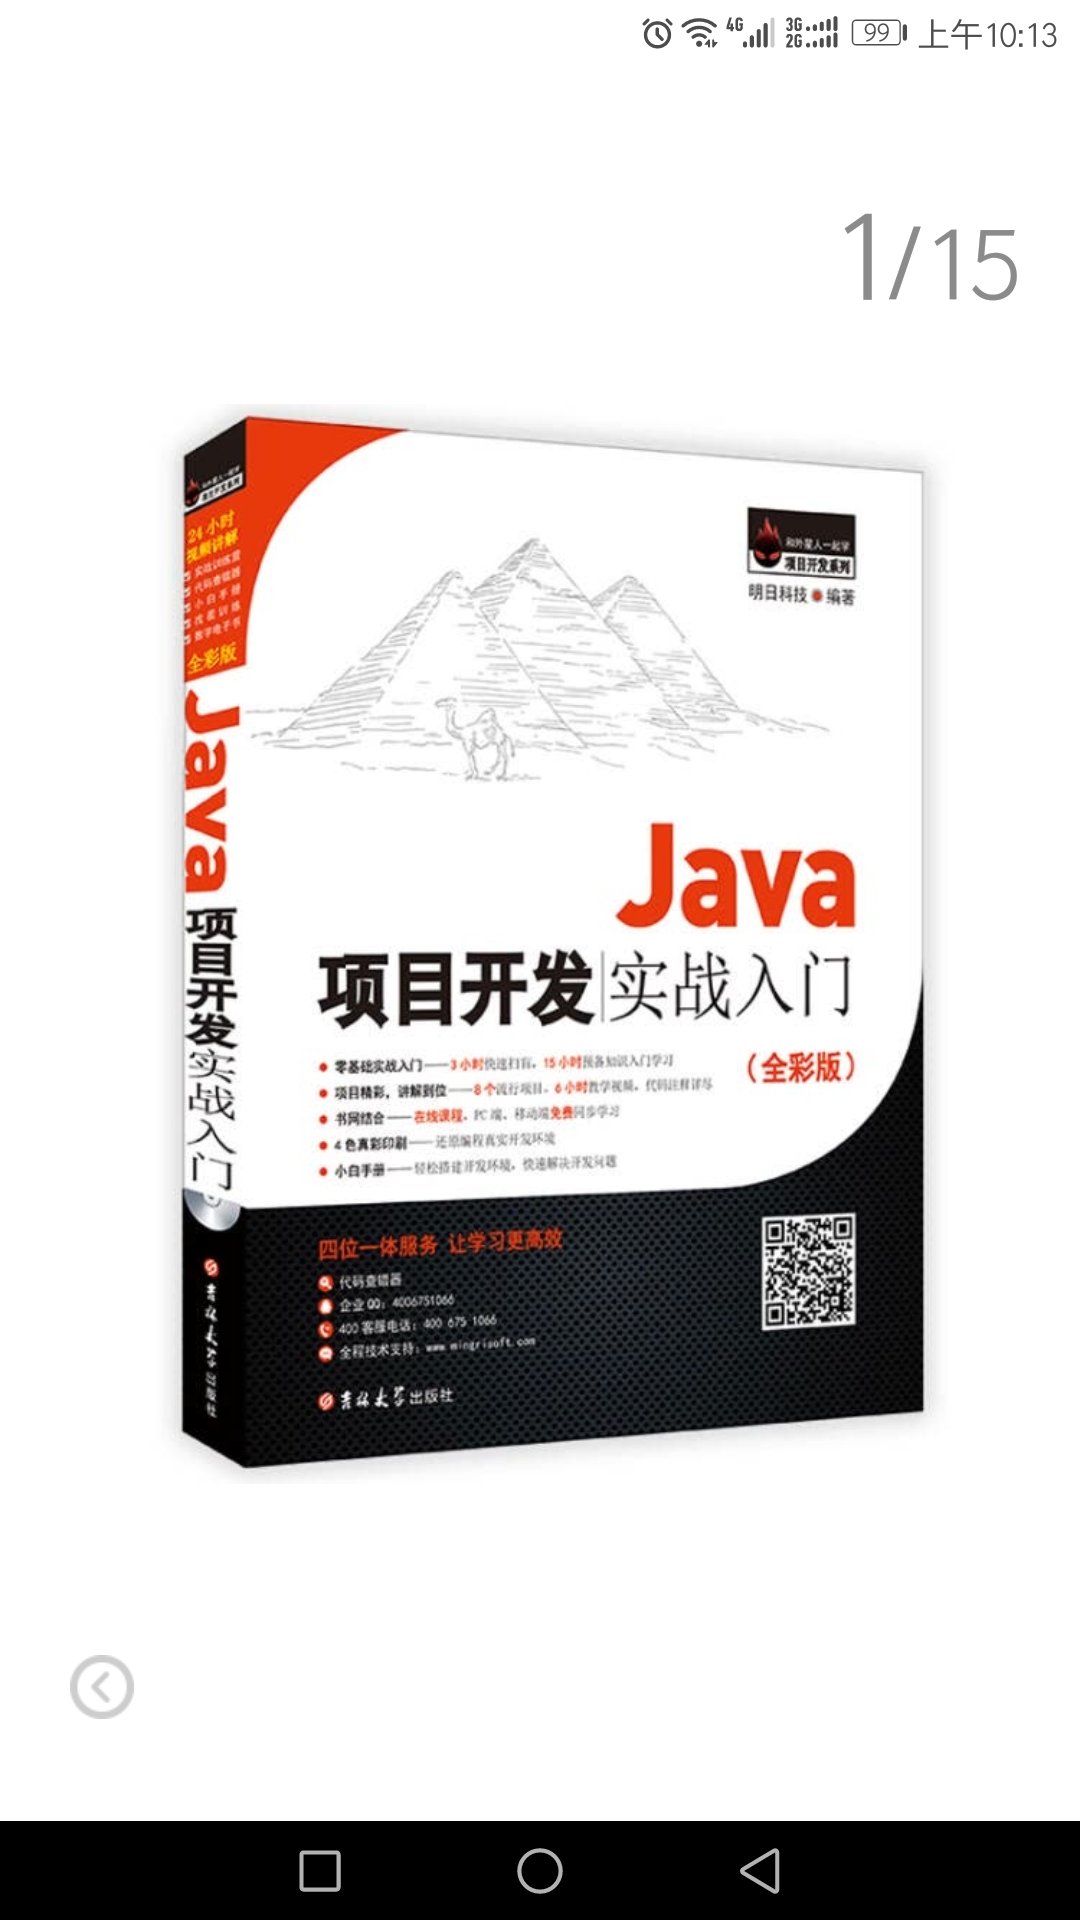 Java语言初学者，一本书也许什么都不能解决，也许能解决一些问题，不管解决不解决，书已经买了，看不看它就在那里，不偏不倚！